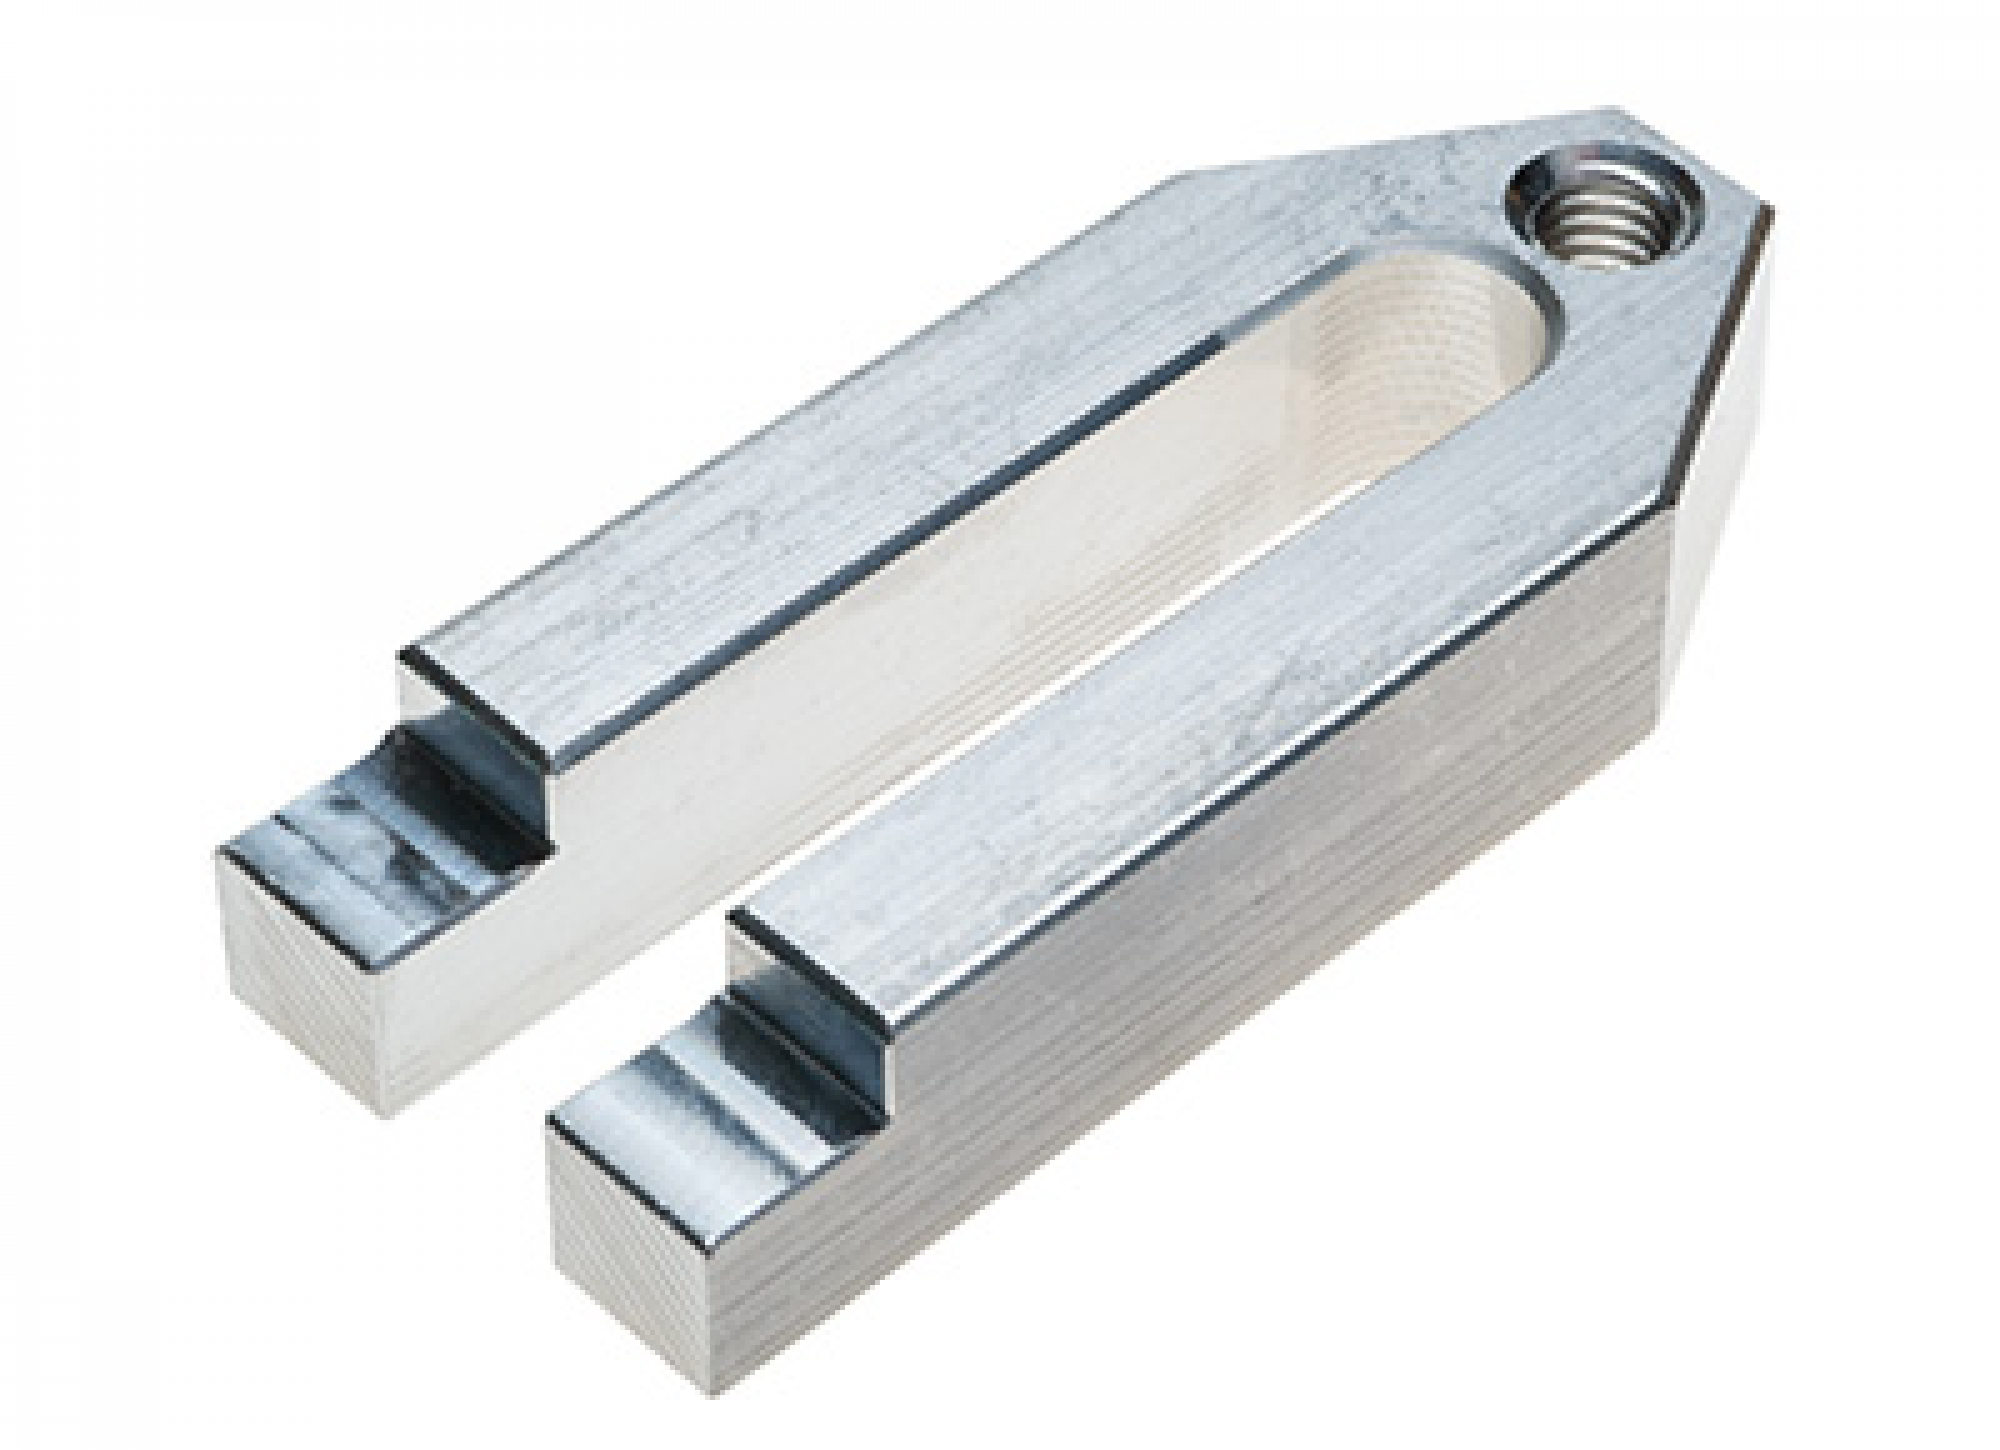 Height adjustable Aluminum fork clamp M8, single